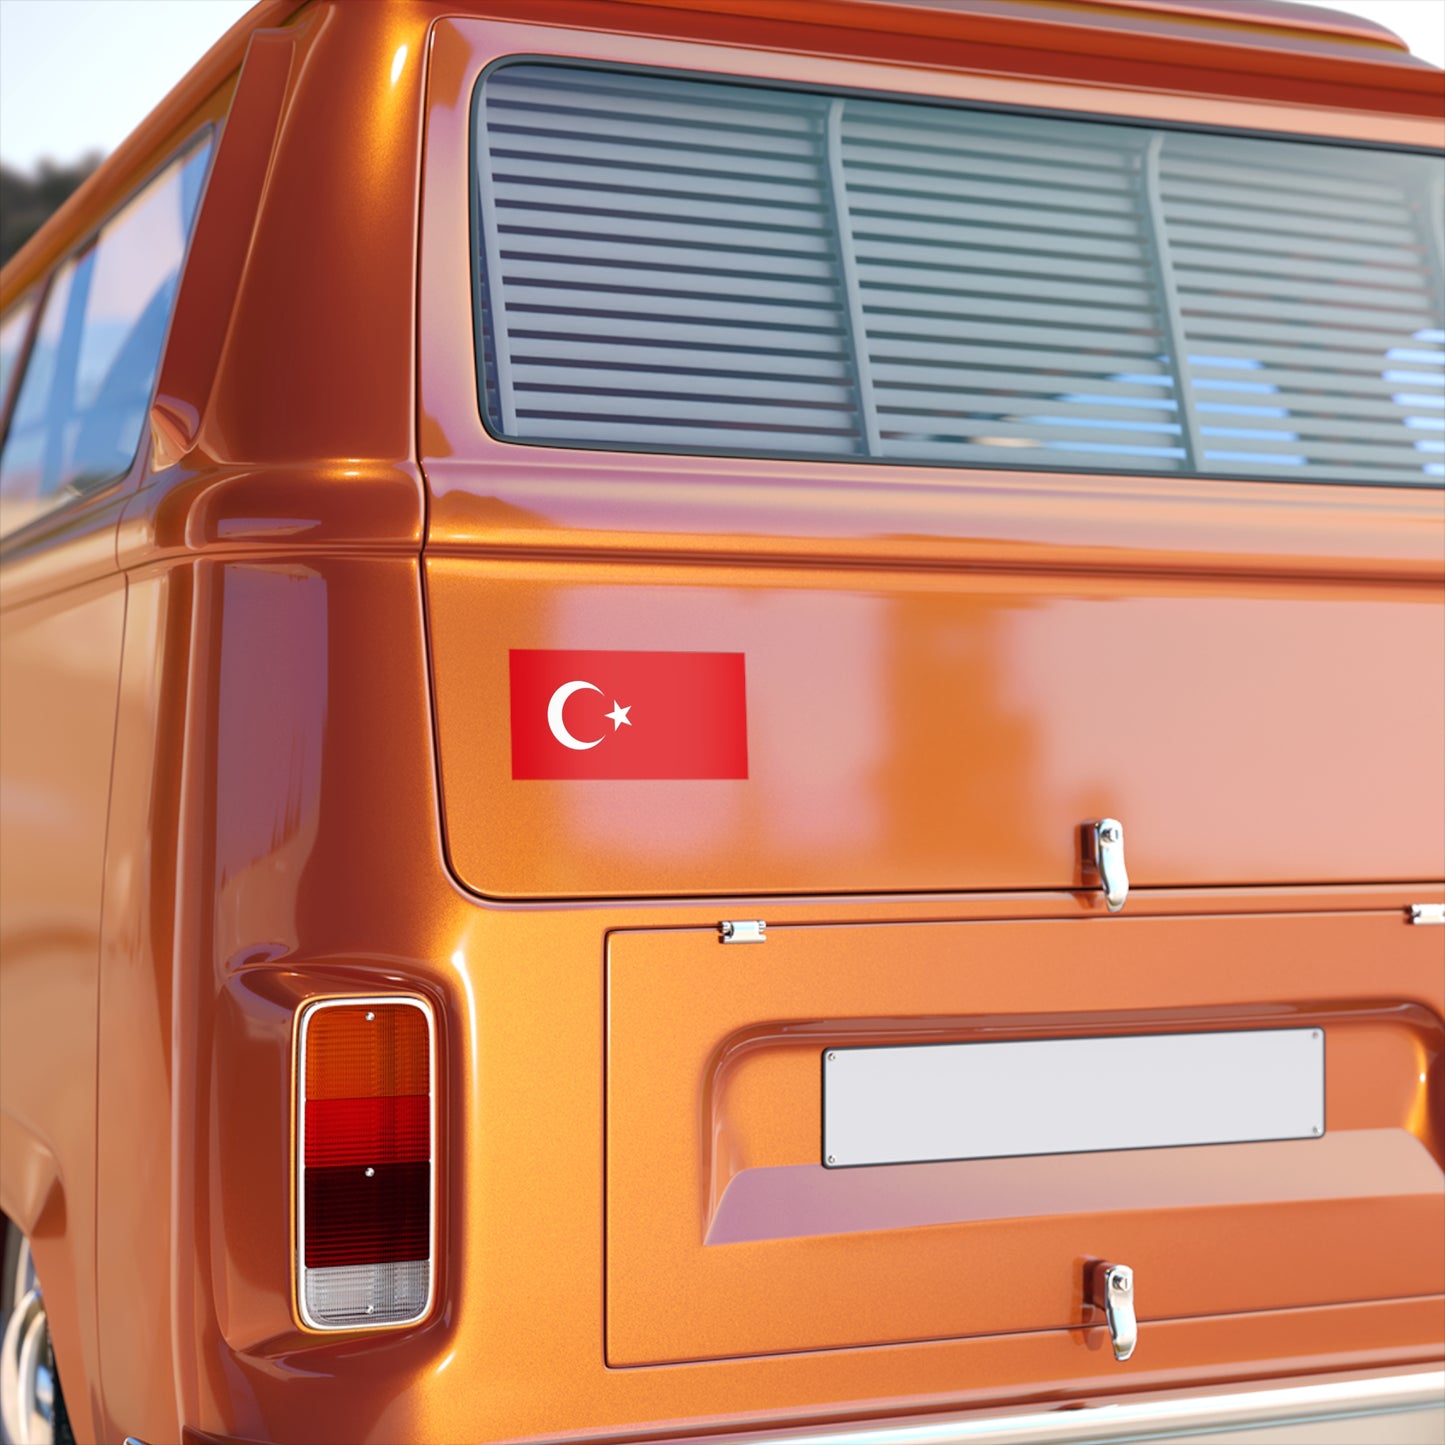 Turkey Flag Bumper Stickers